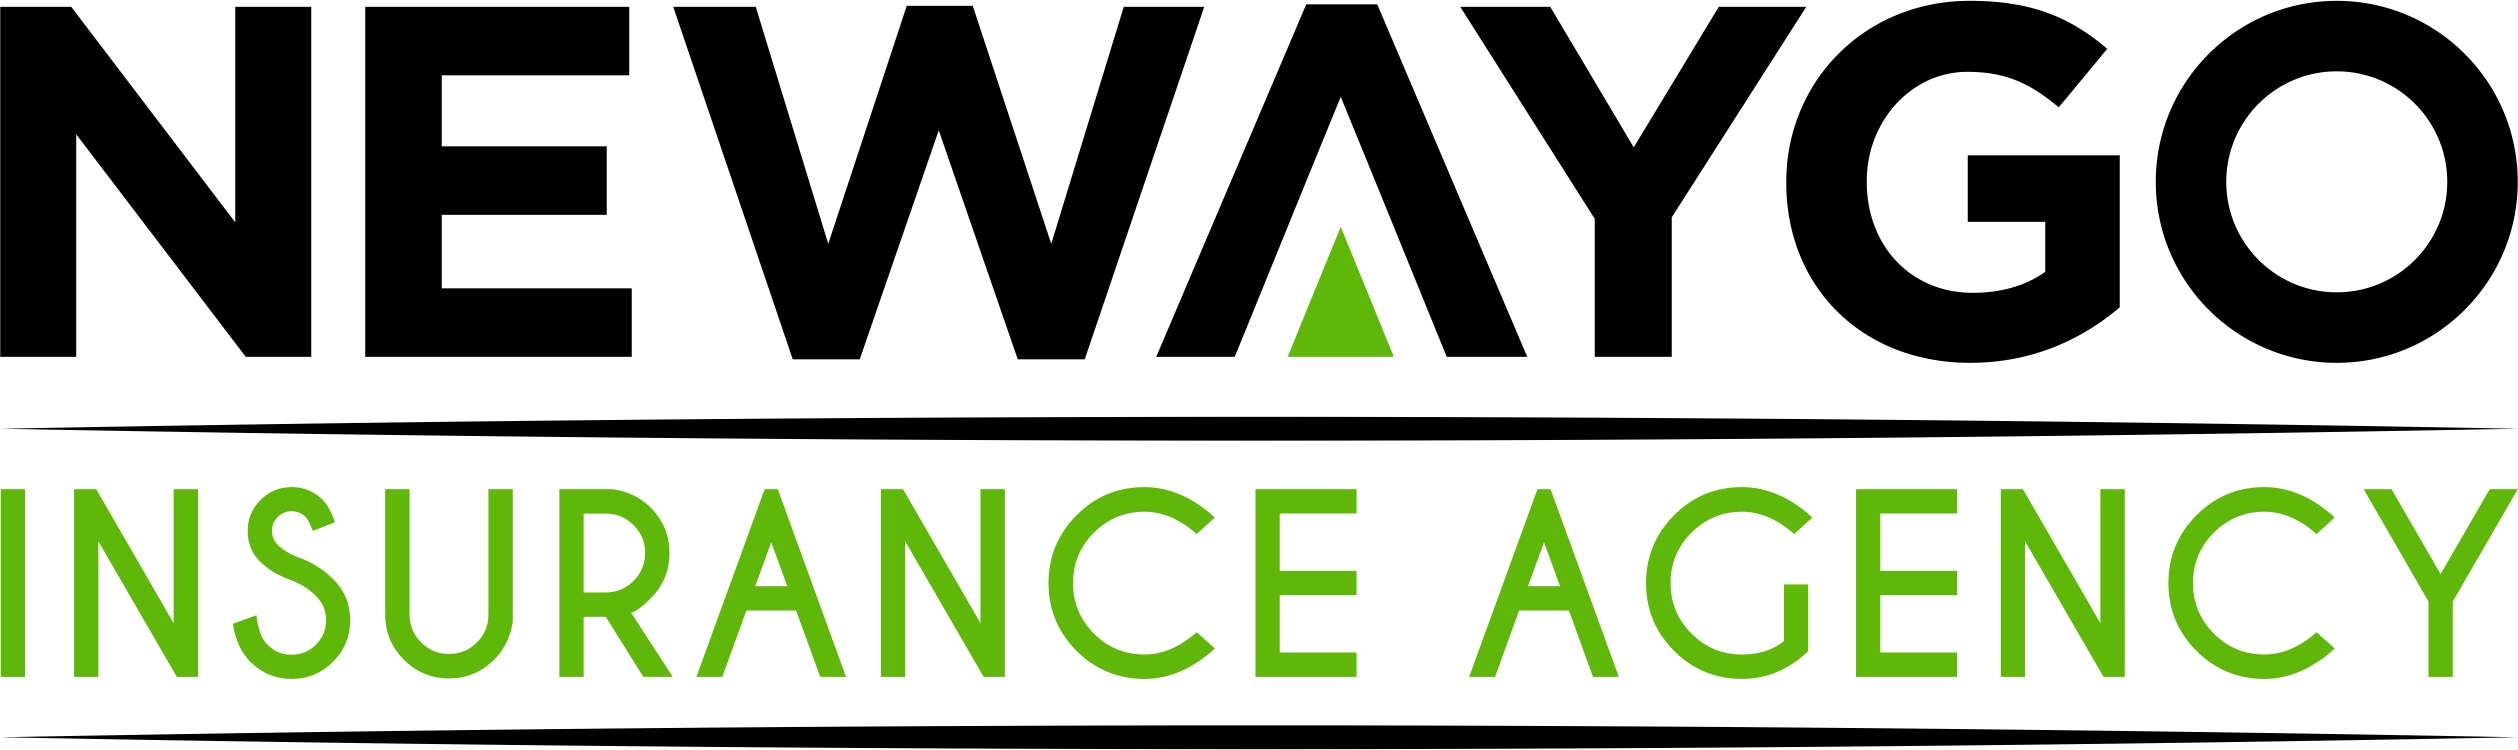 Newaygo Insurance Agency Logo Transparent Background